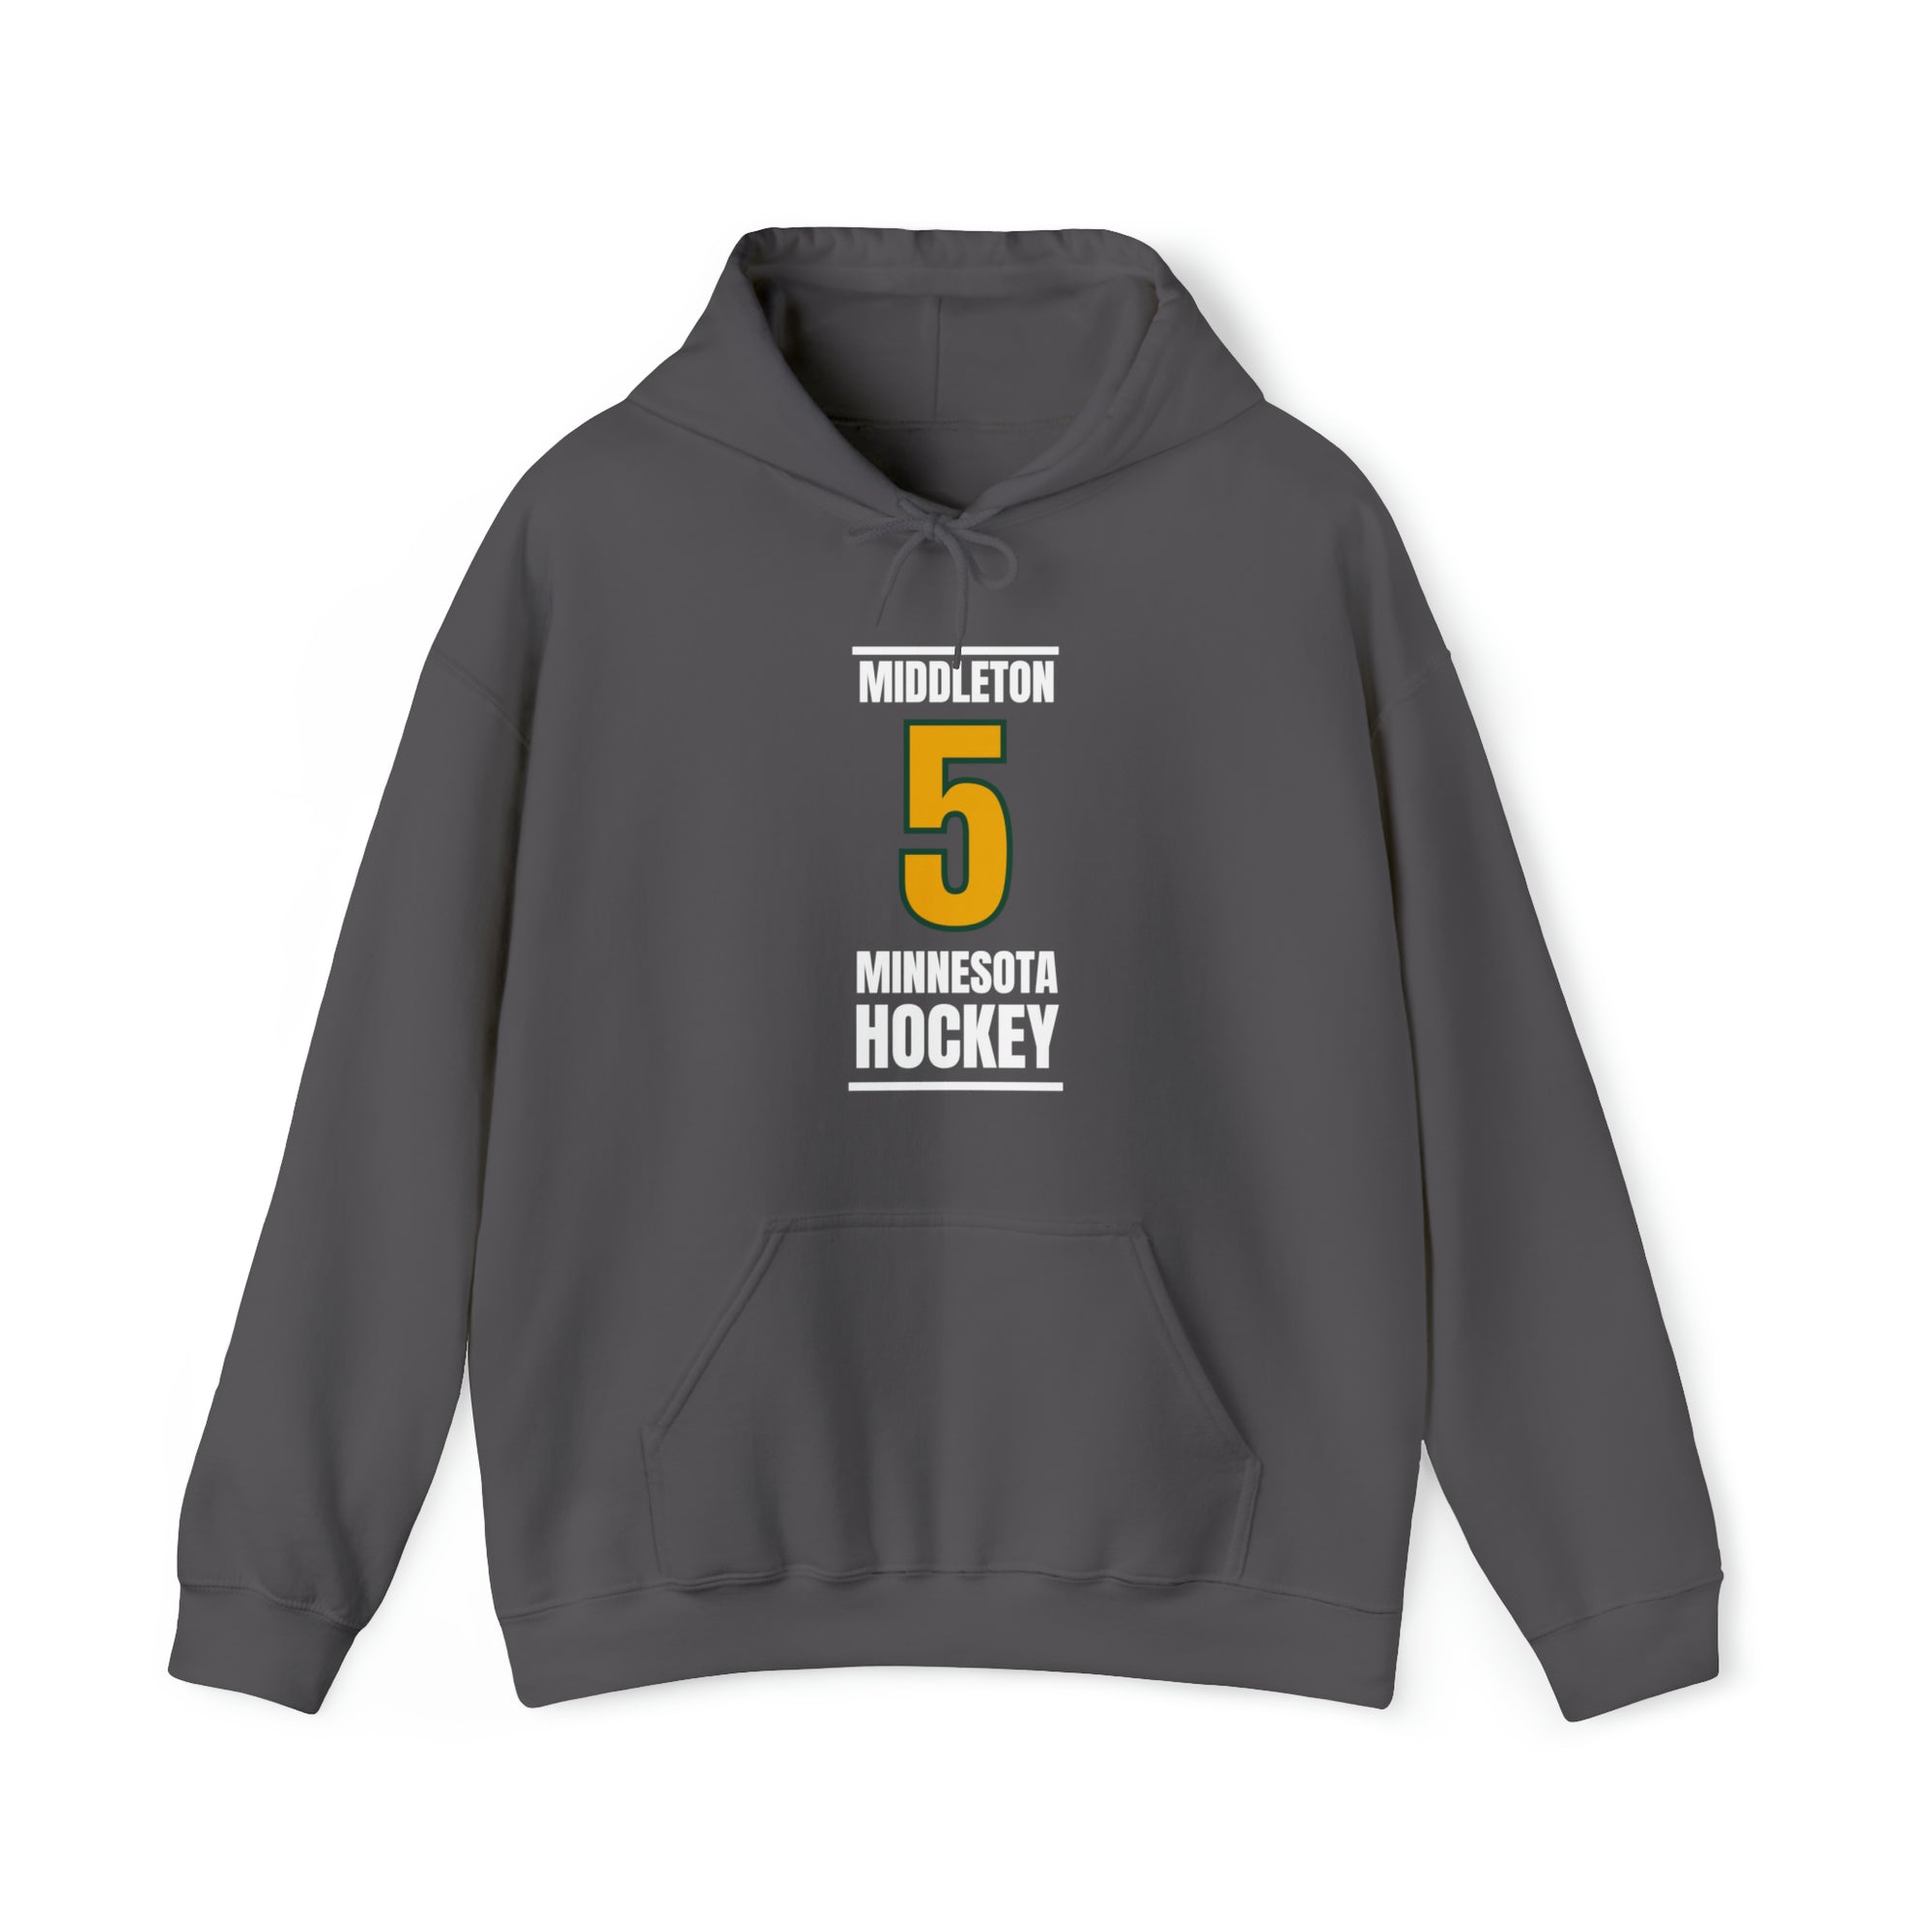 Middleton 5 Minnesota Hockey Gold Vertical Design Unisex Hooded Sweatshirt